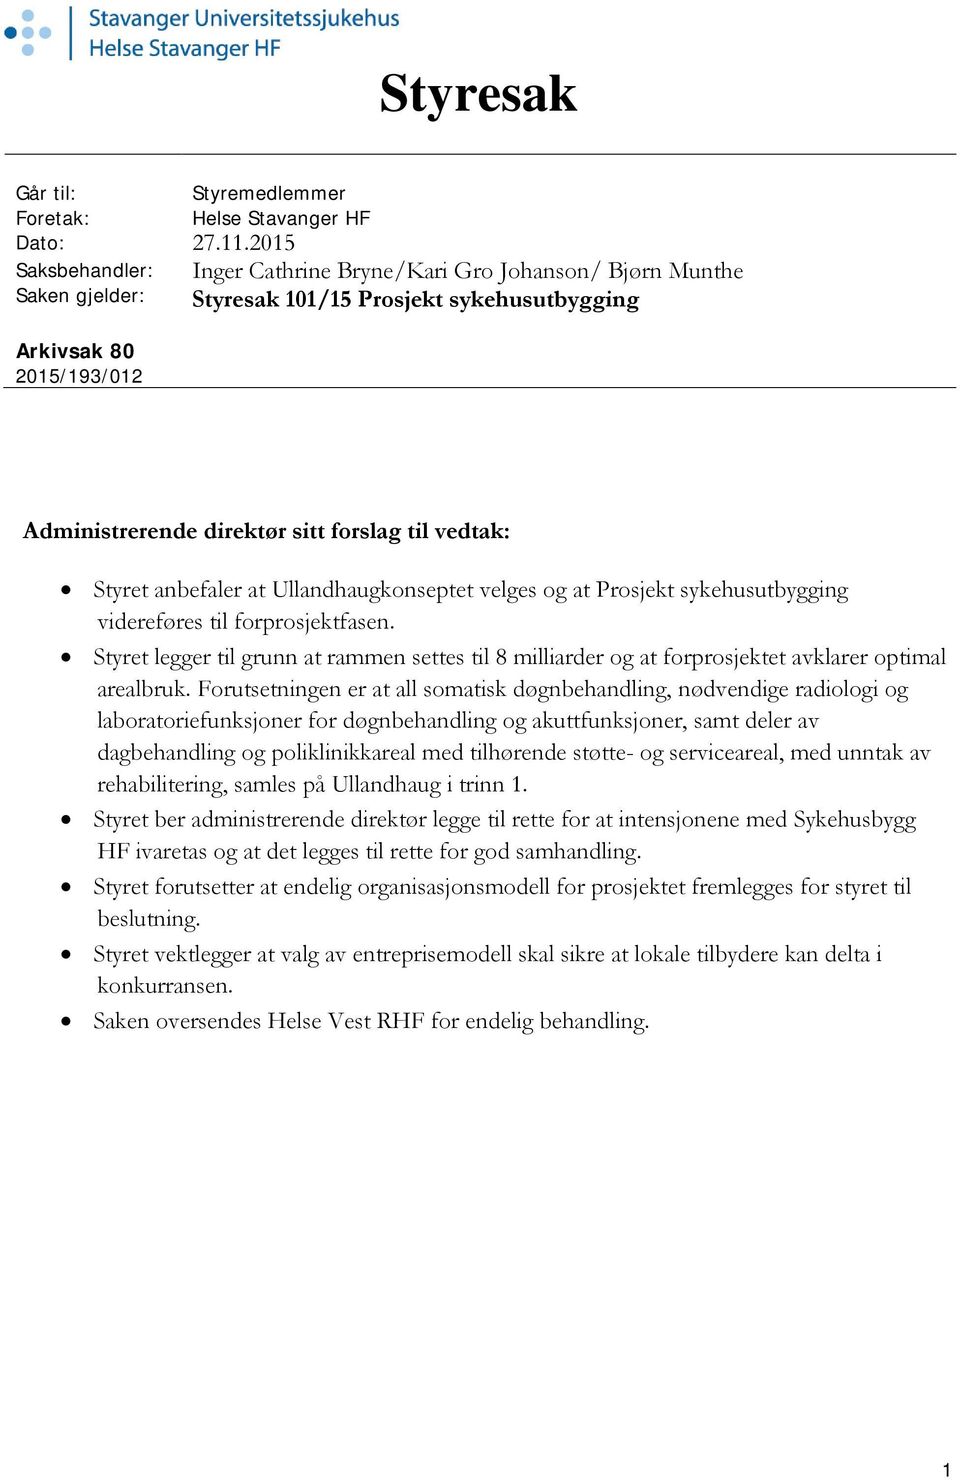 vedtak: Styret anbefaler at Ullandhaugkonseptet velges og at Prosjekt sykehusutbygging videreføres til forprosjektfasen.